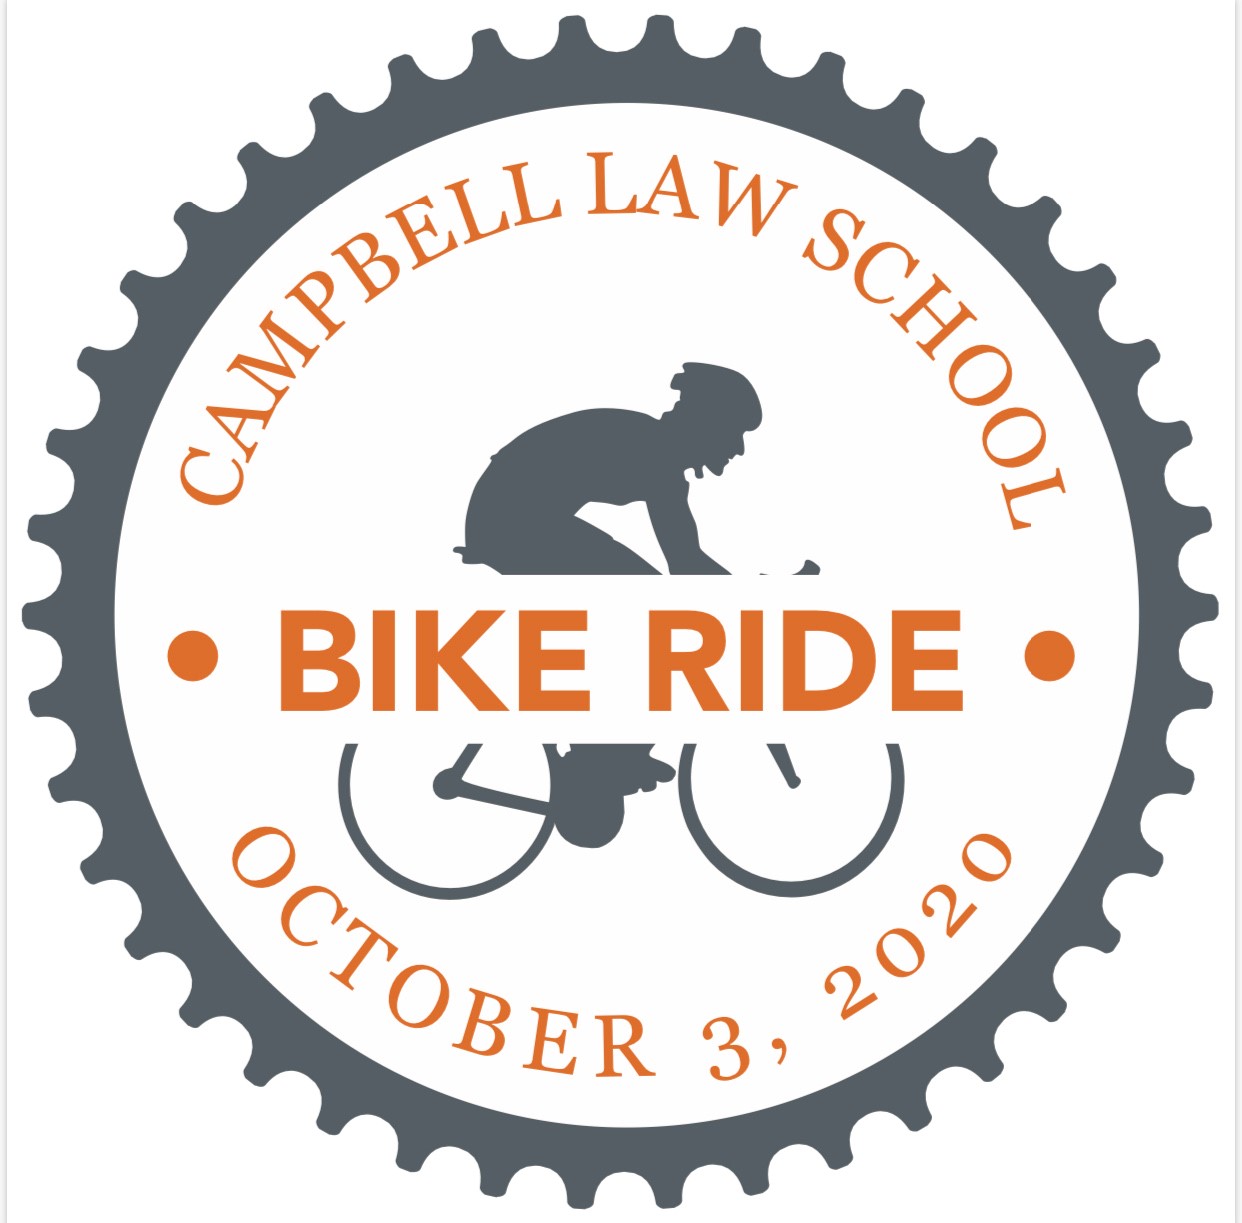 2020 Campbell Law School Ride